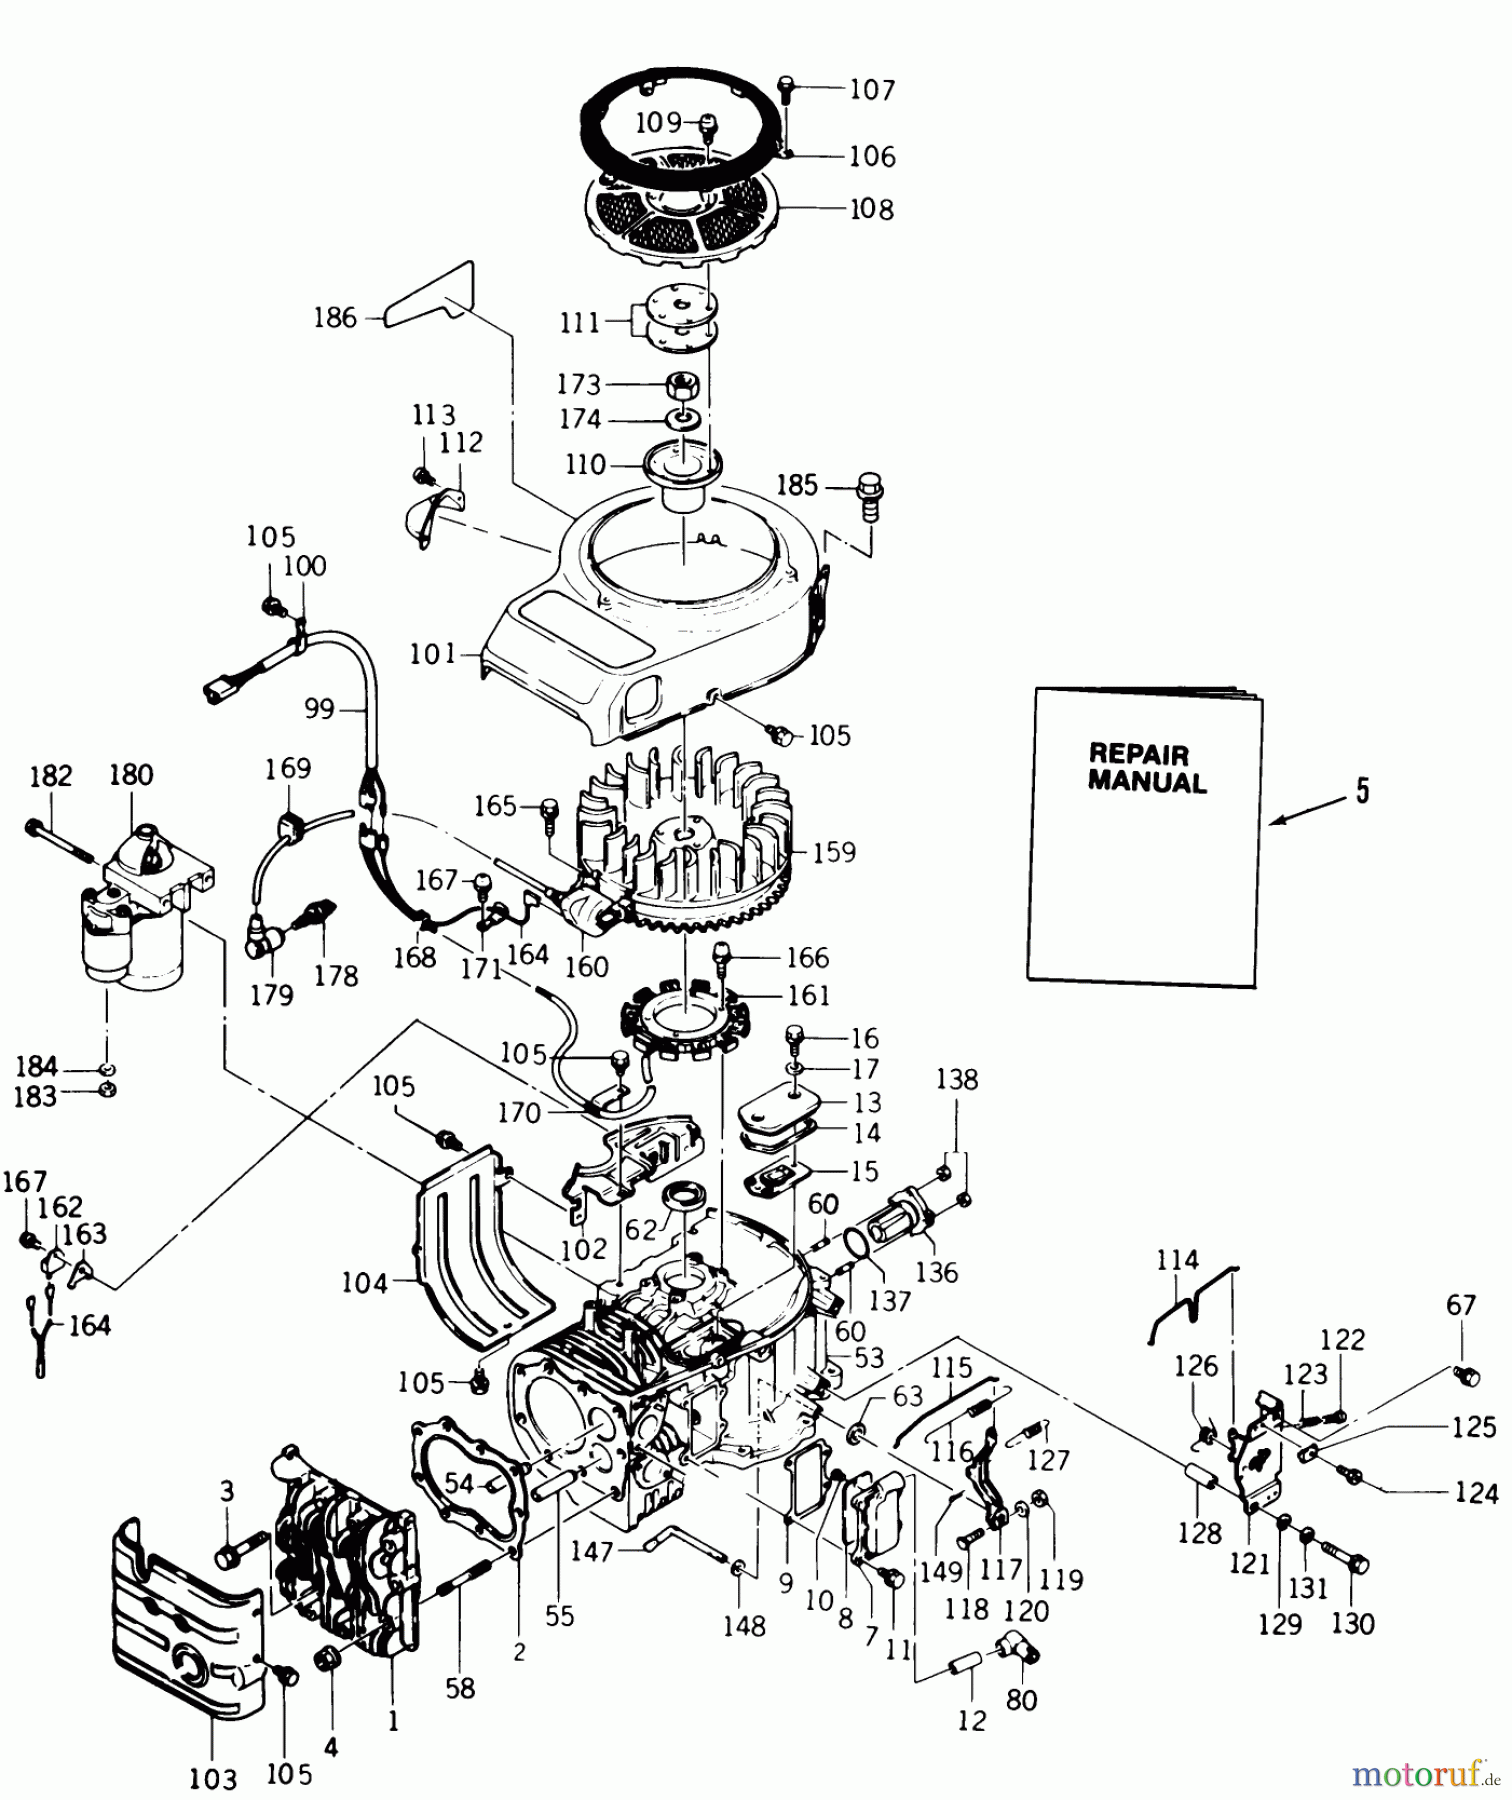  Toro Neu Mowers, Lawn & Garden Tractor Seite 1 22-13KE01 (252-H) - Toro 252-H Tractor, 1988 KAWASAKI FB460V TYPE AS-26 ENGINE #1